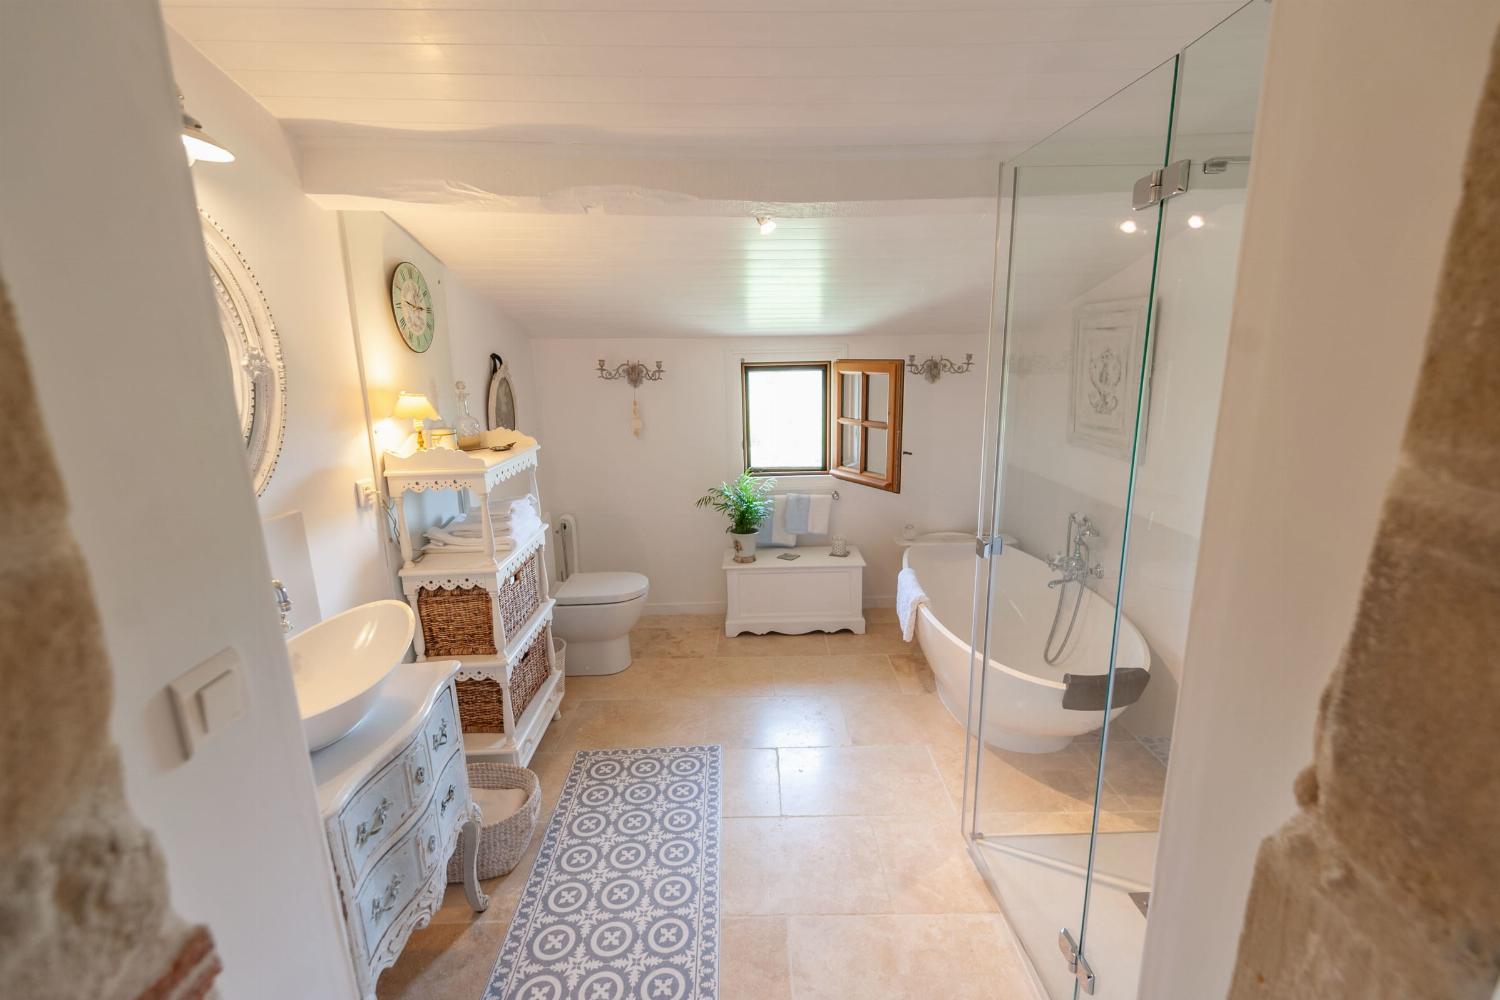 Bathroom | Rental home in Lot-et-Garonne